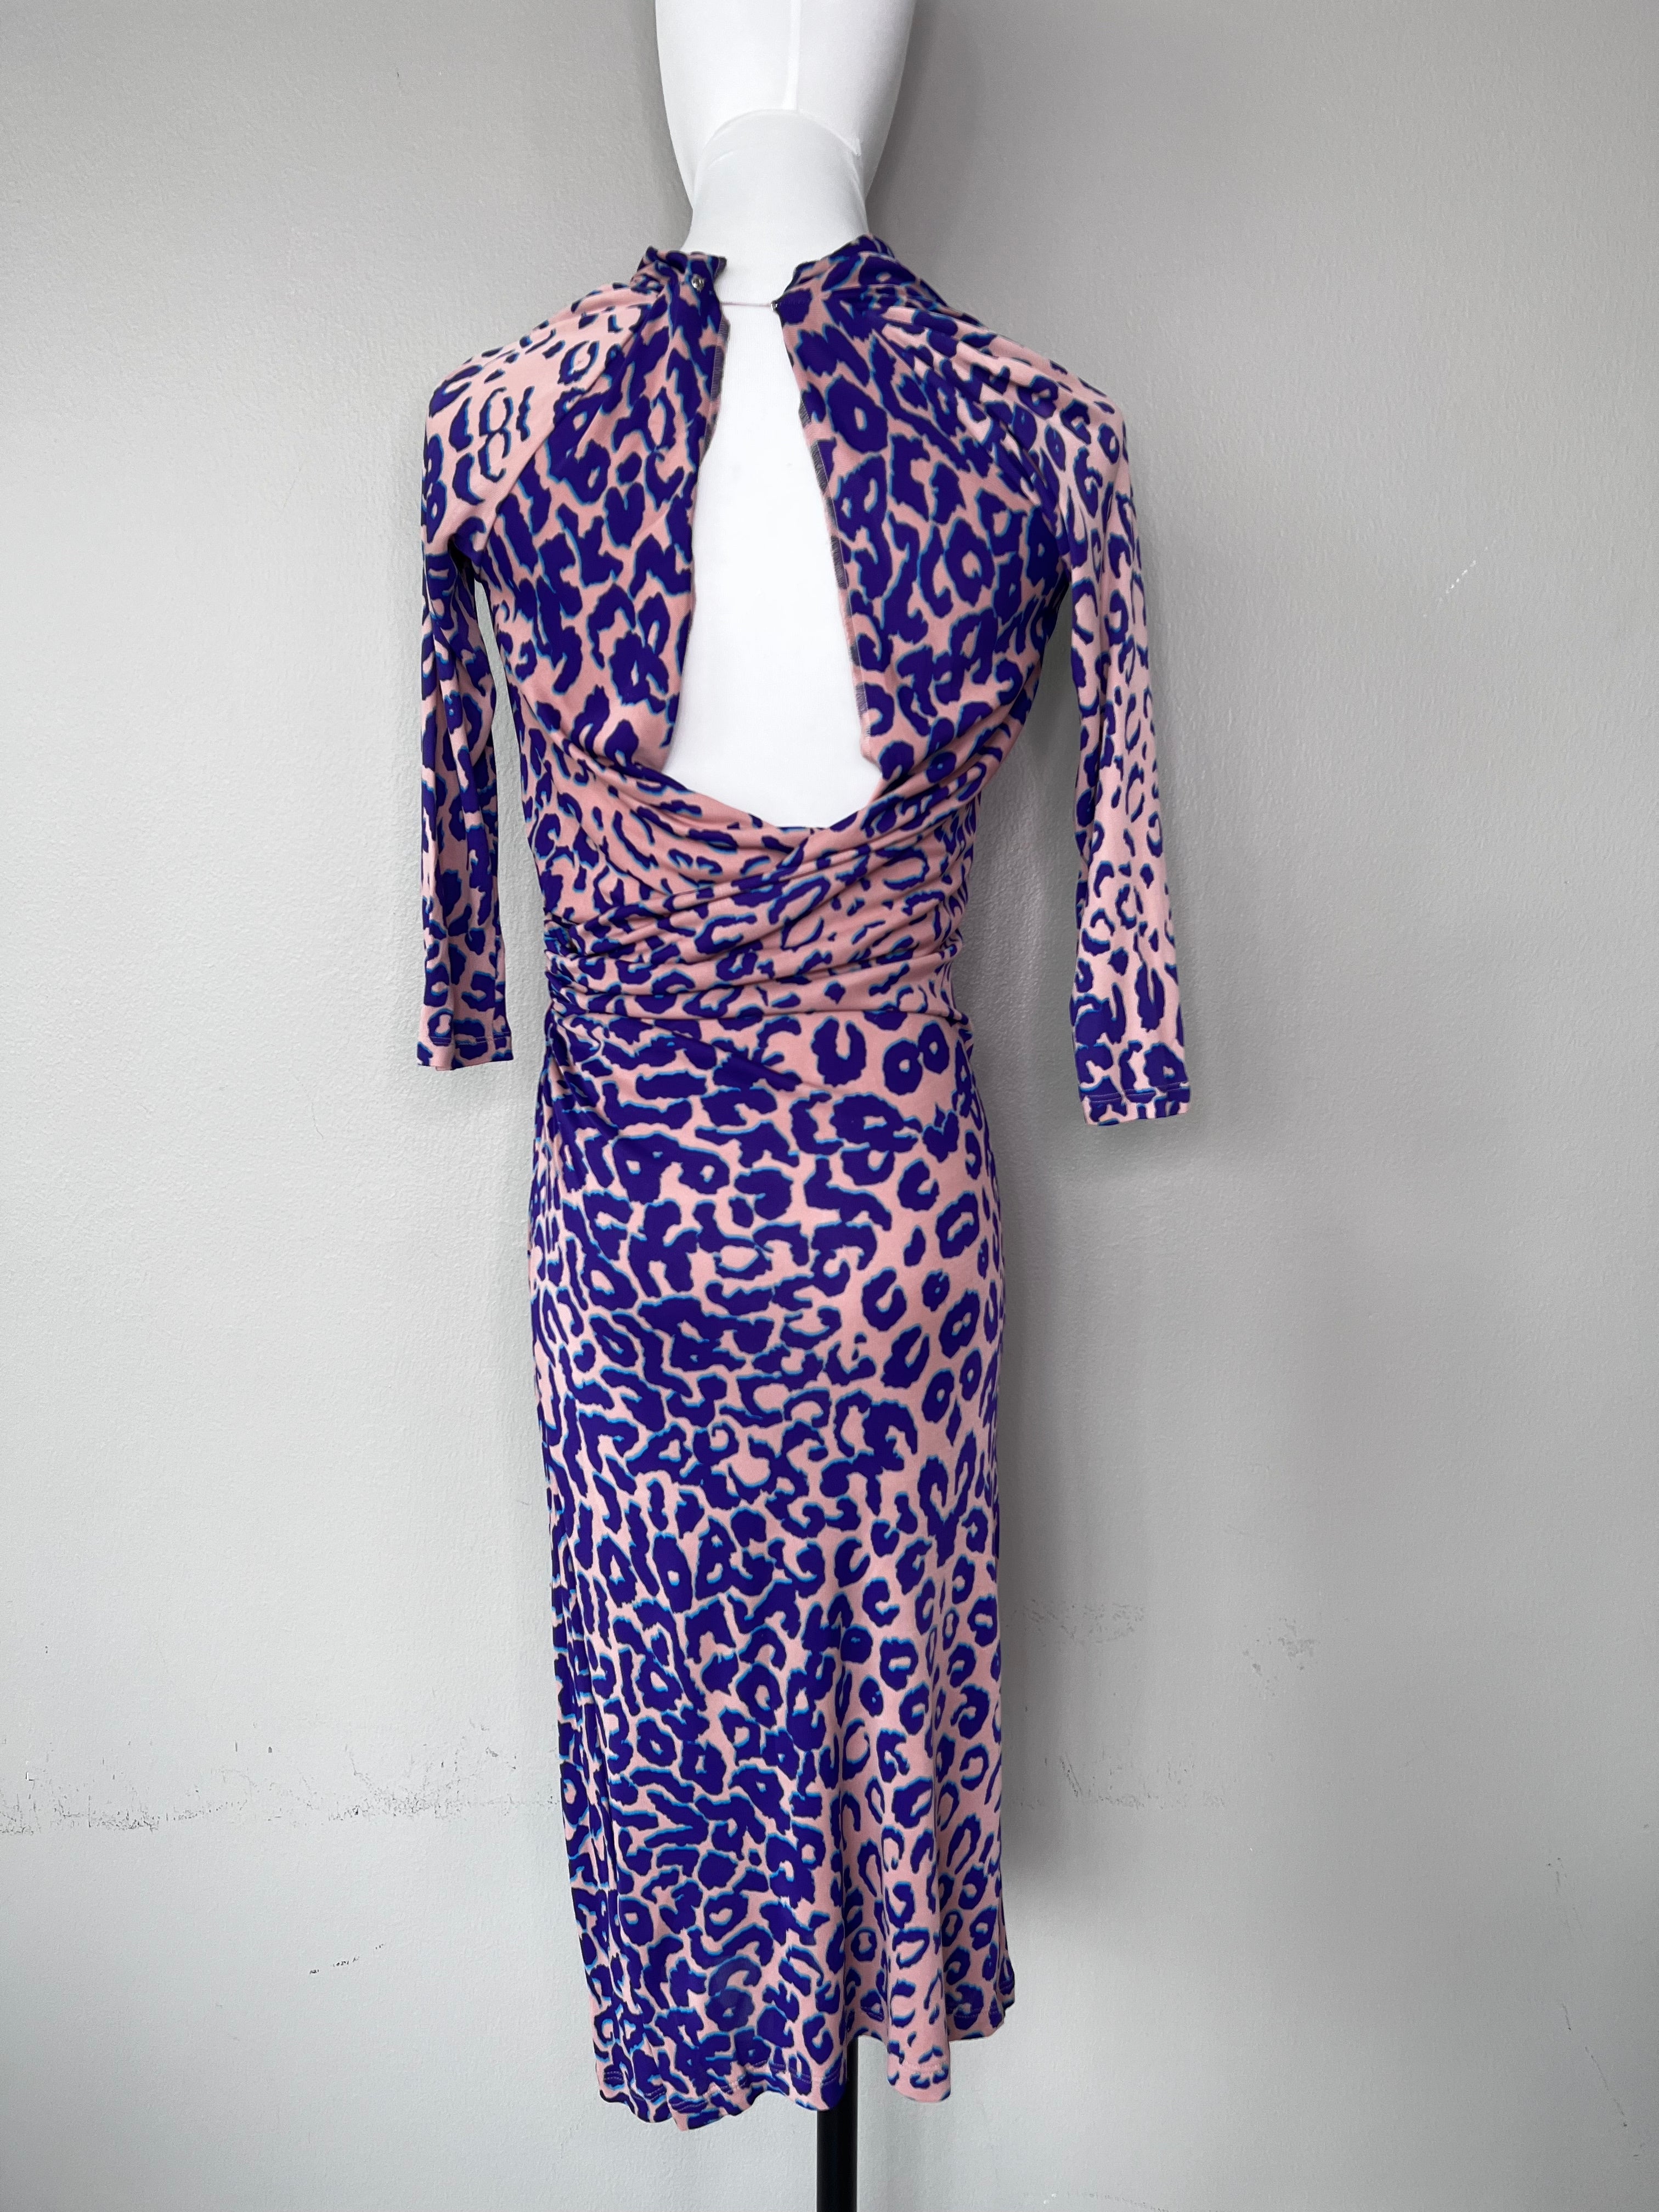 patterned purplish-nude knee length leopard dress that wraps your body - LK Bennett